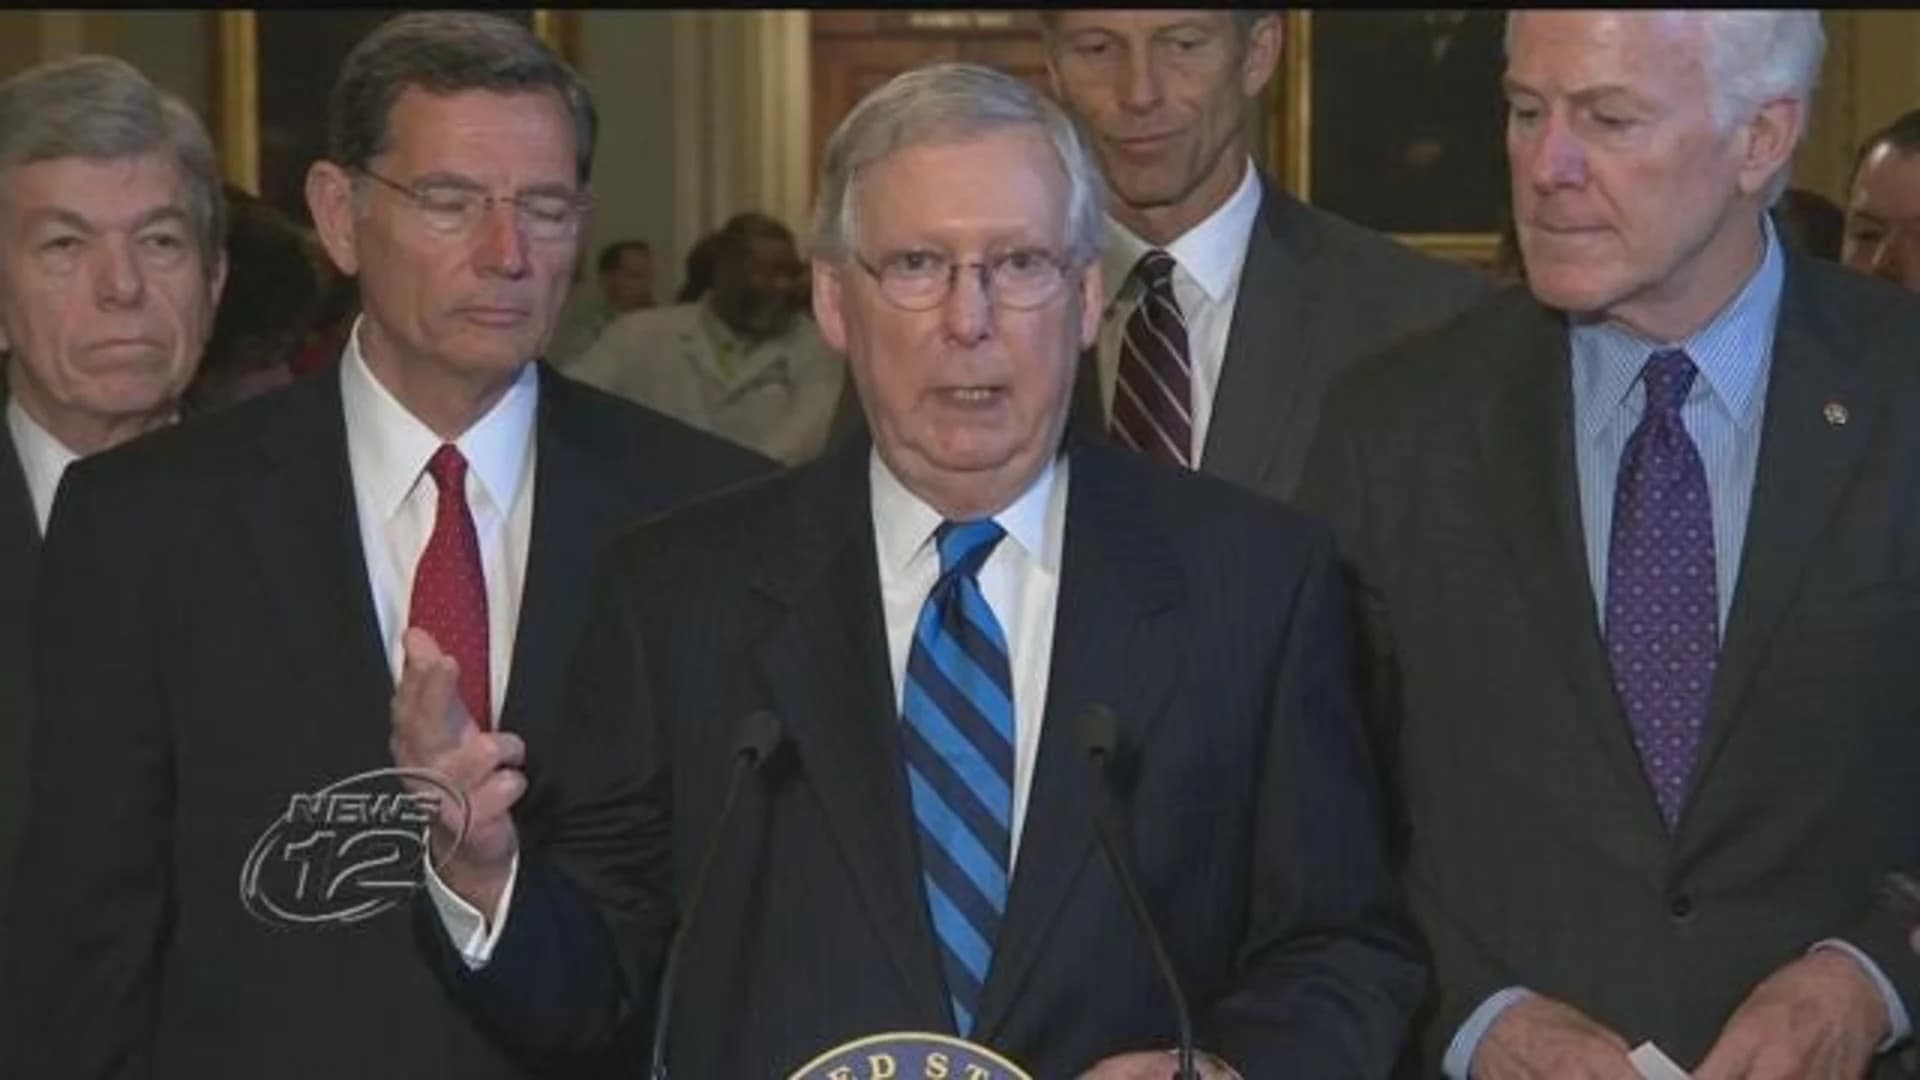 Senate Republicans continue health care reform effort